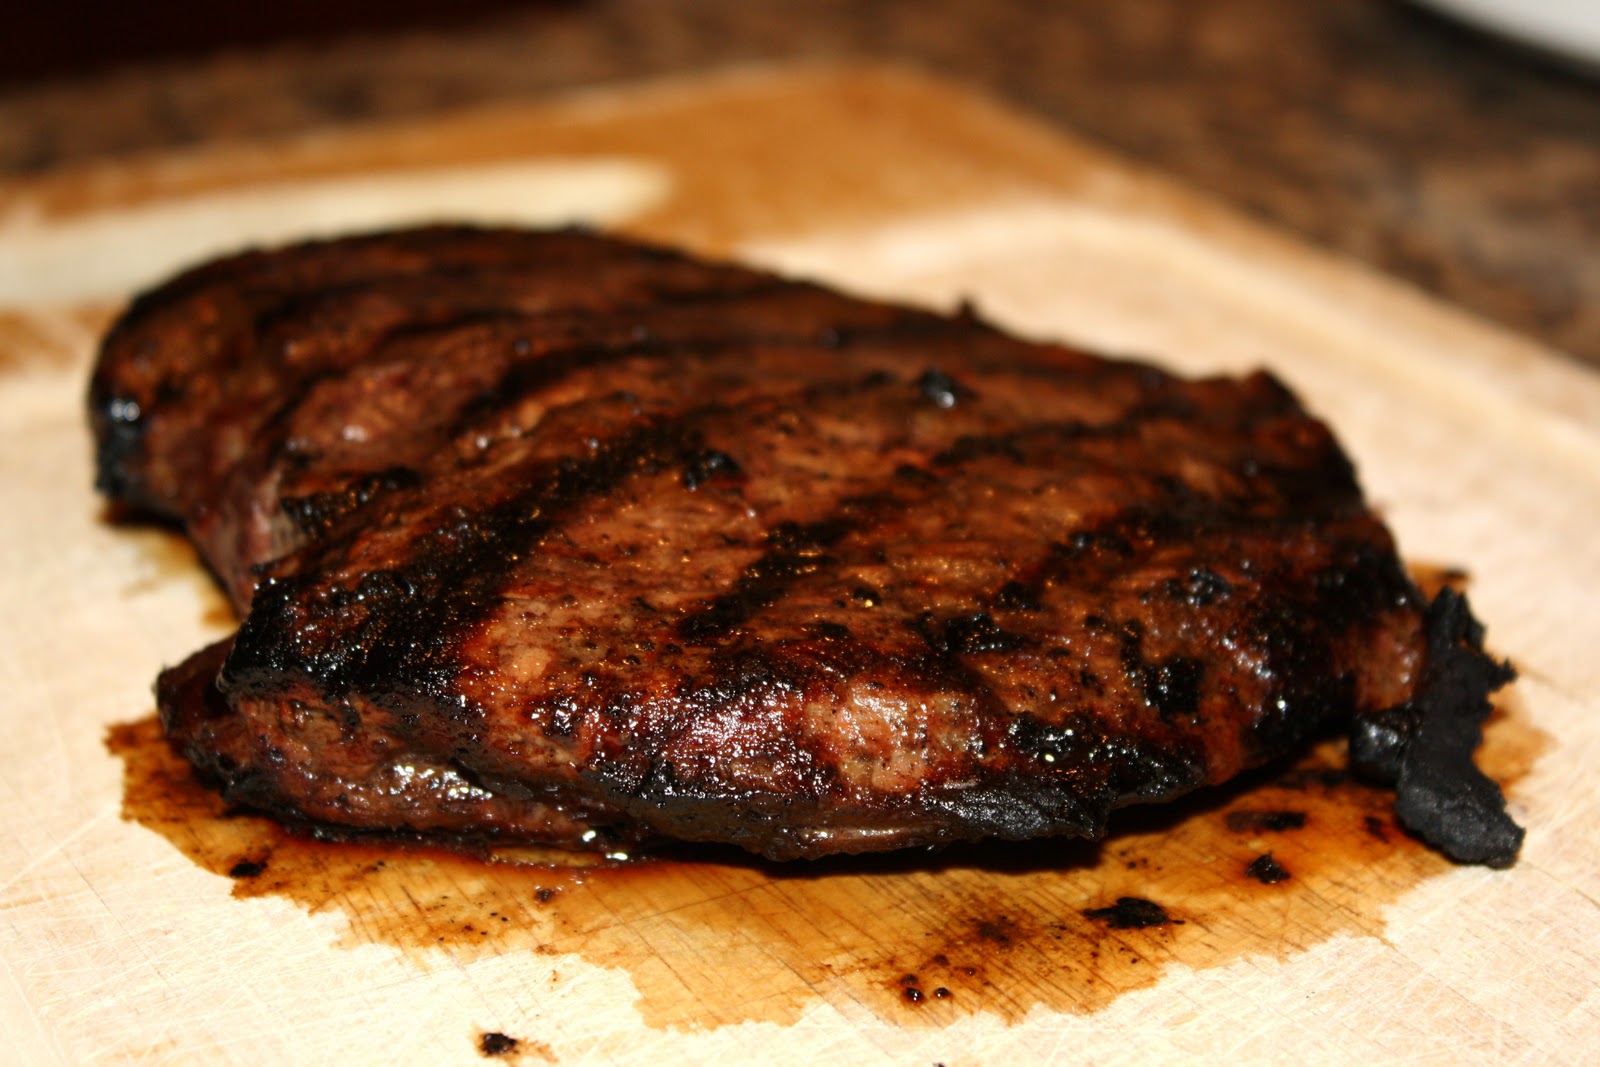 http://4.bp.blogspot.com/-pQwAwv6WupM/TubWpBM3eyI/AAAAAAAAAFA/Z3DUqz5IIPI/s1600/resting+steak.JPG